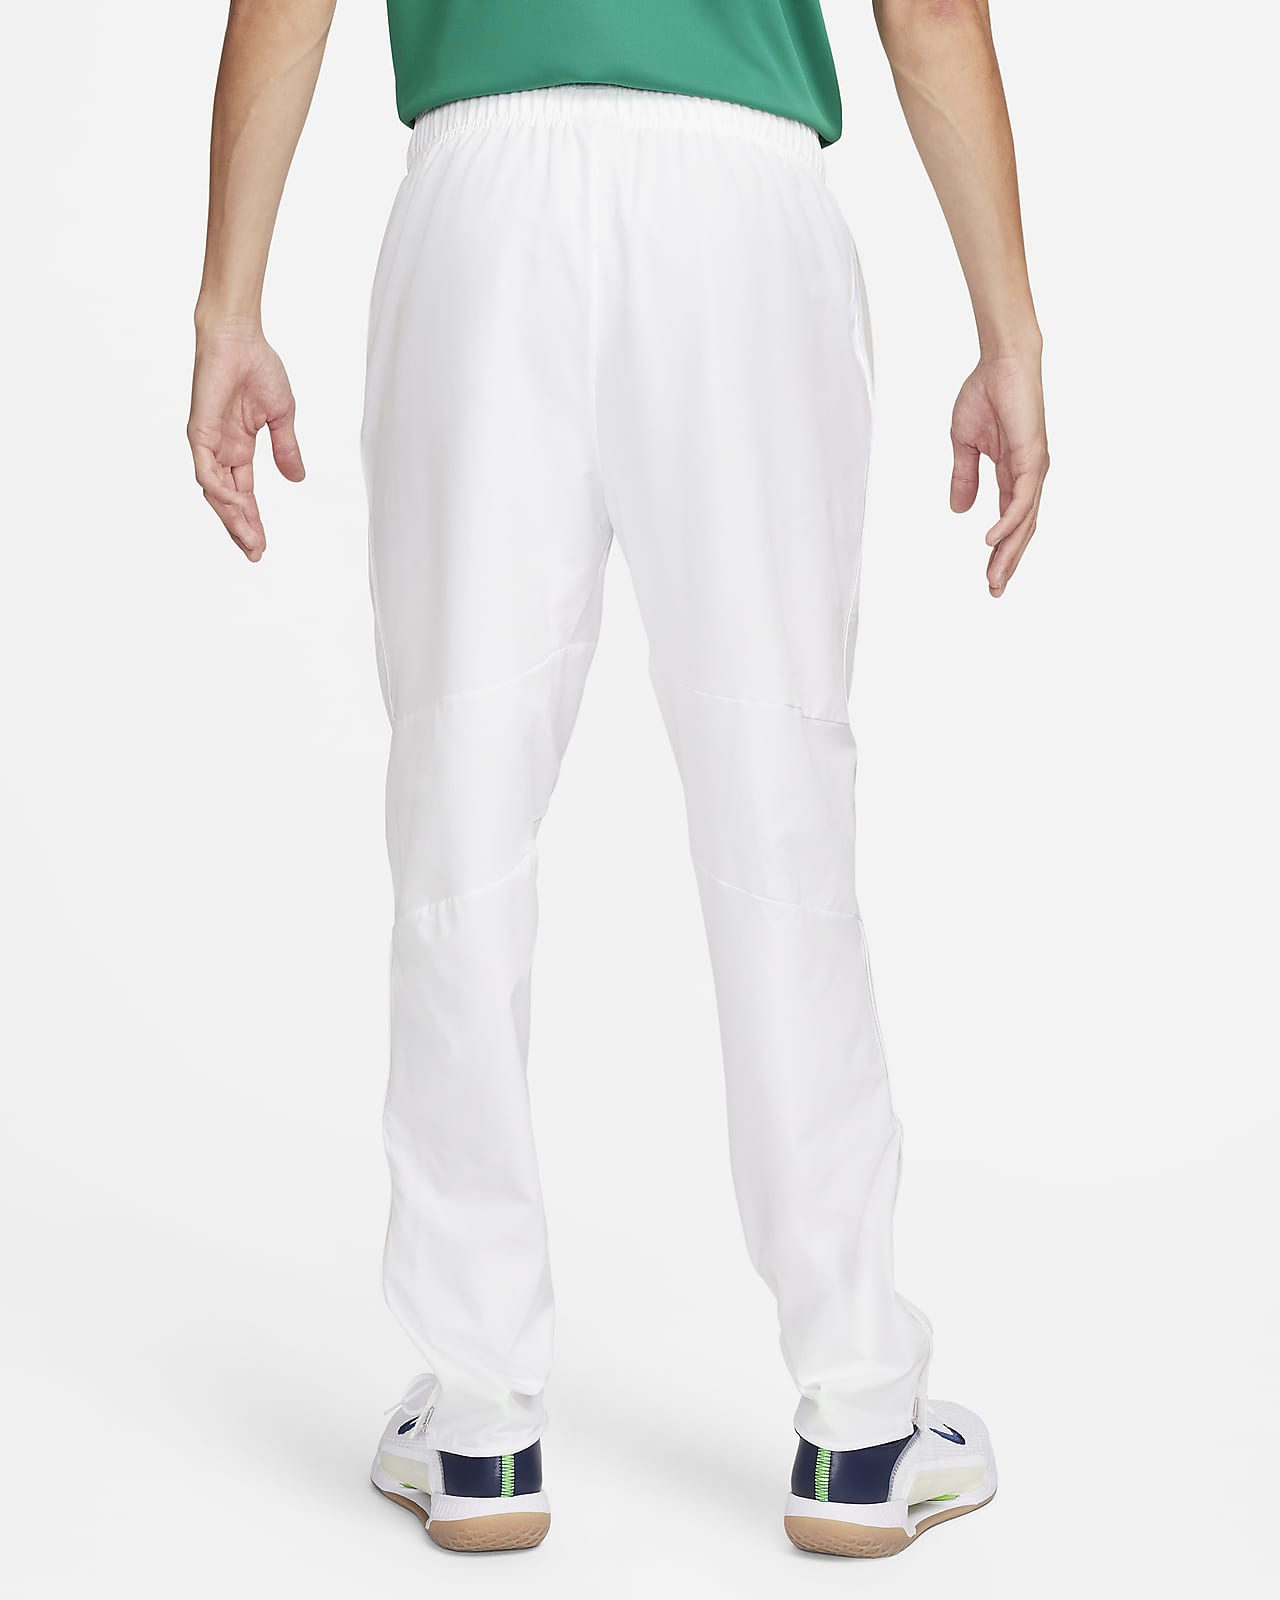 Cricket Trousers Whites Flannels Match Pants Boys Mens Adults OMRAG | eBay